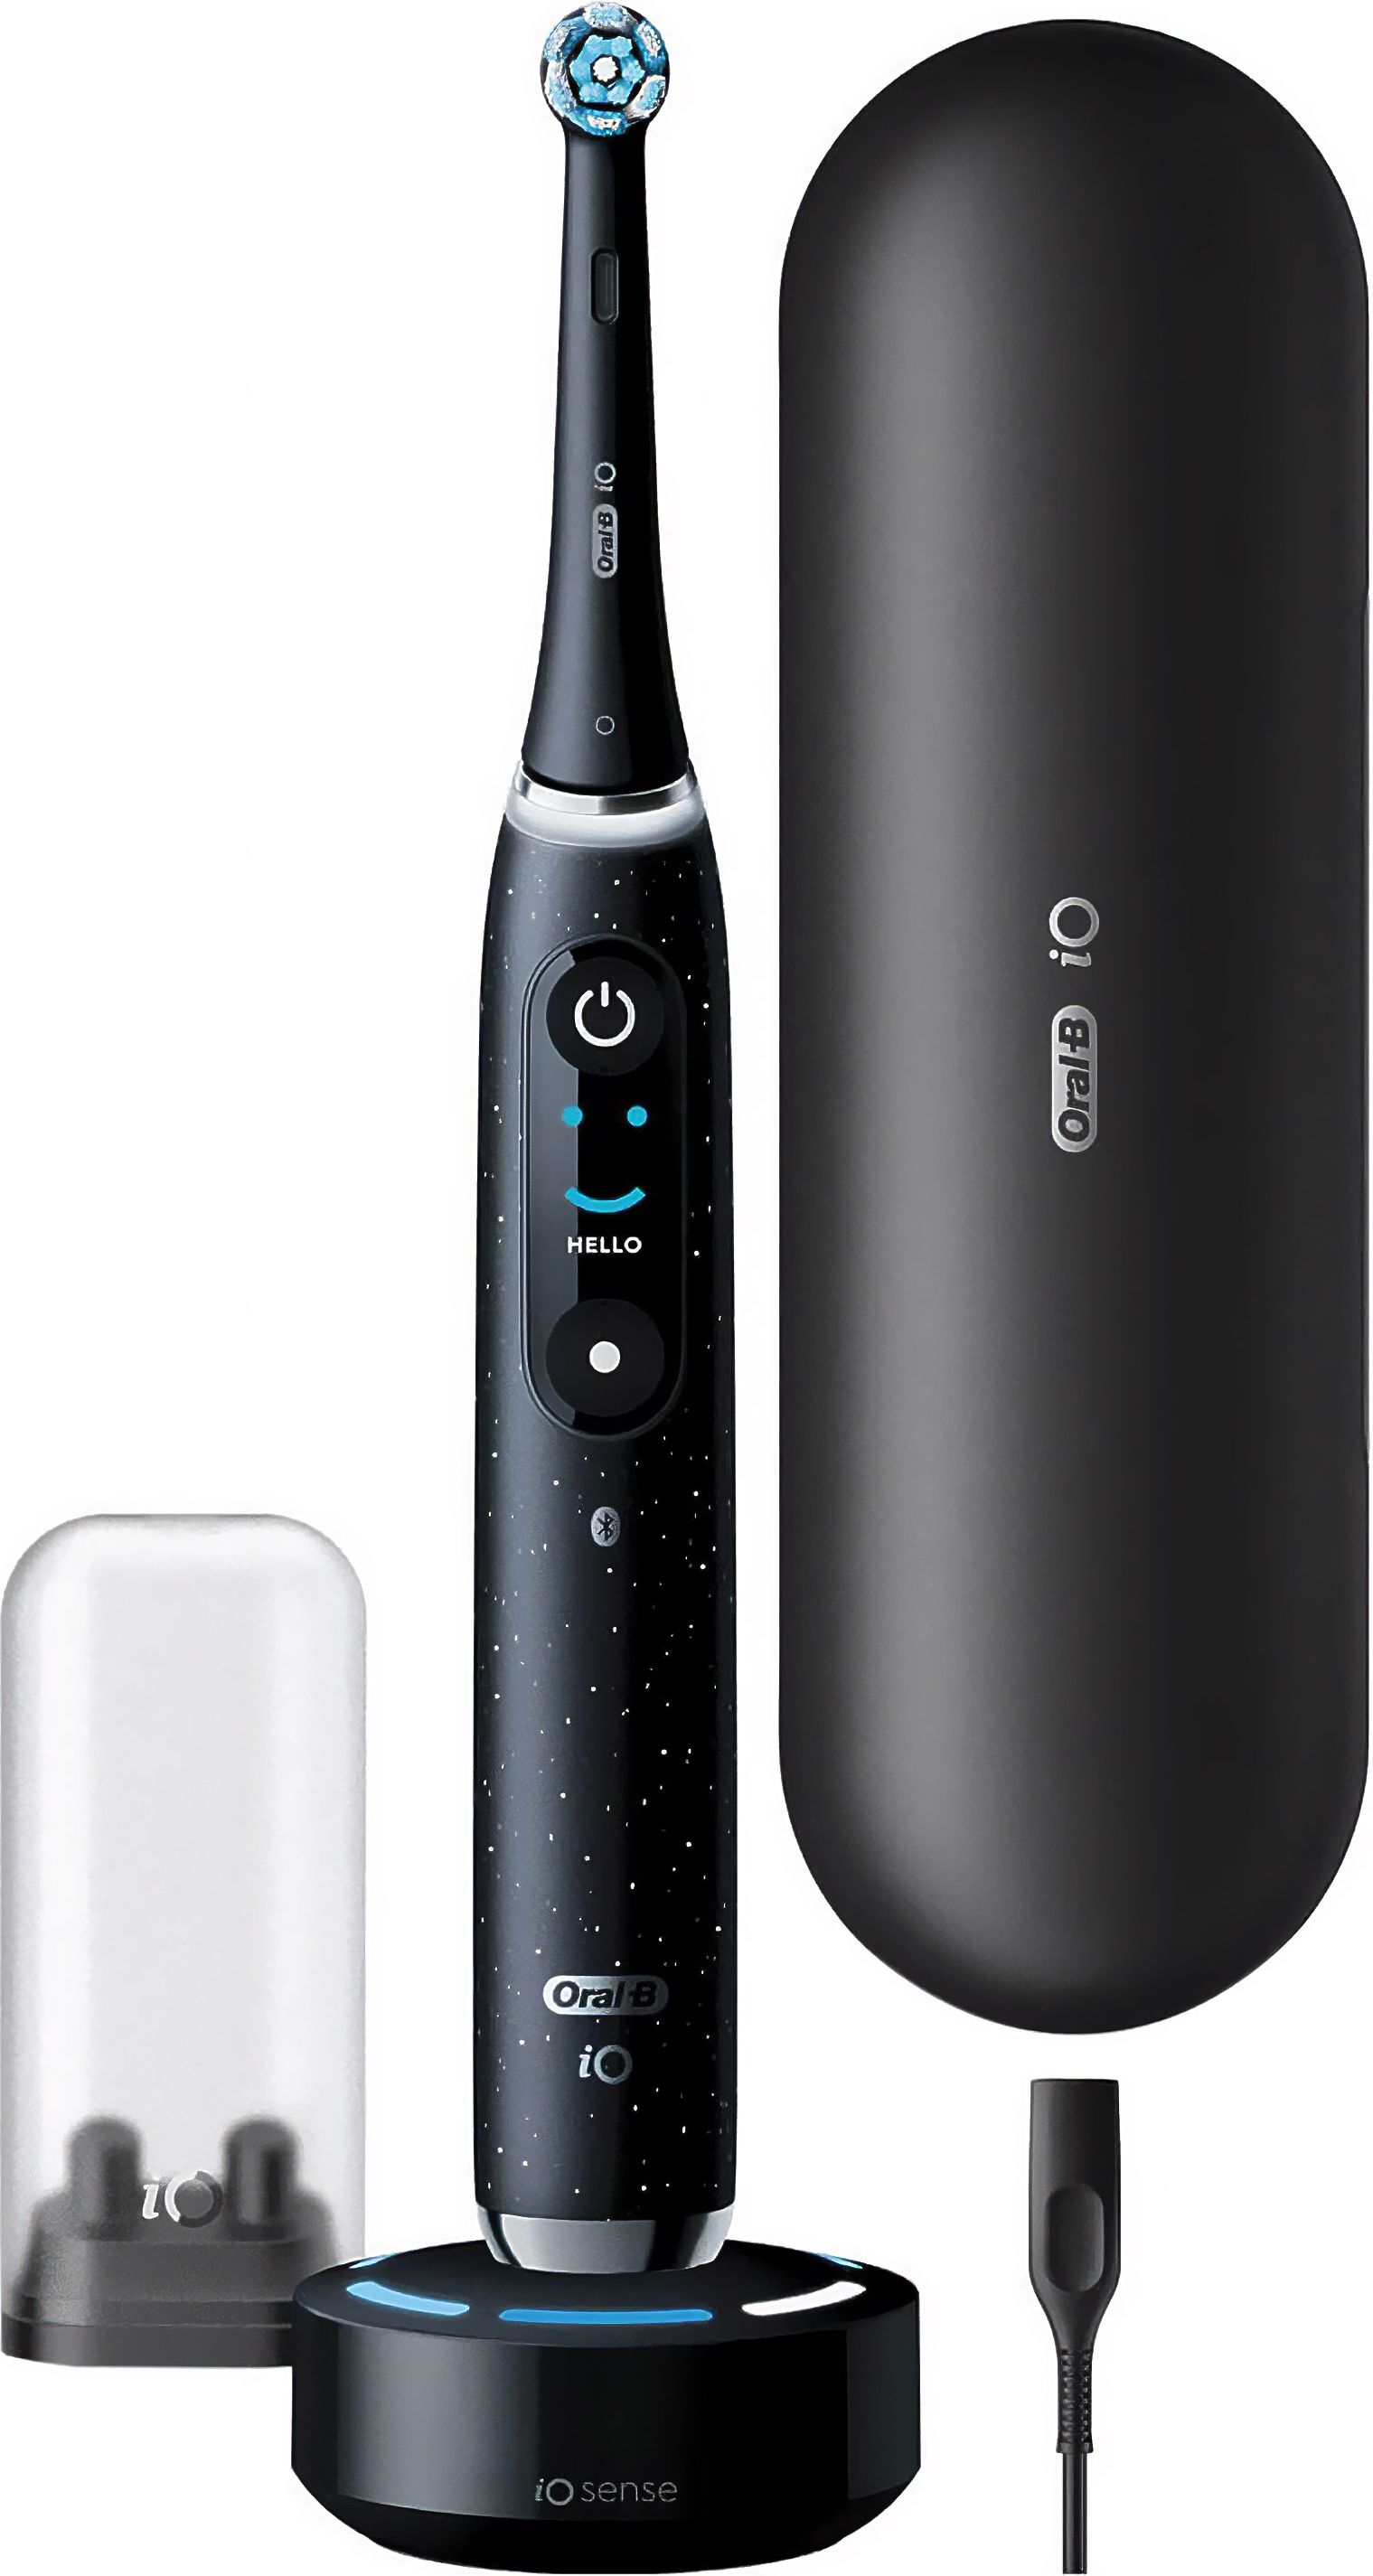 Oral B iO 10 Electric Toothbrush - Cosmic Black, Black